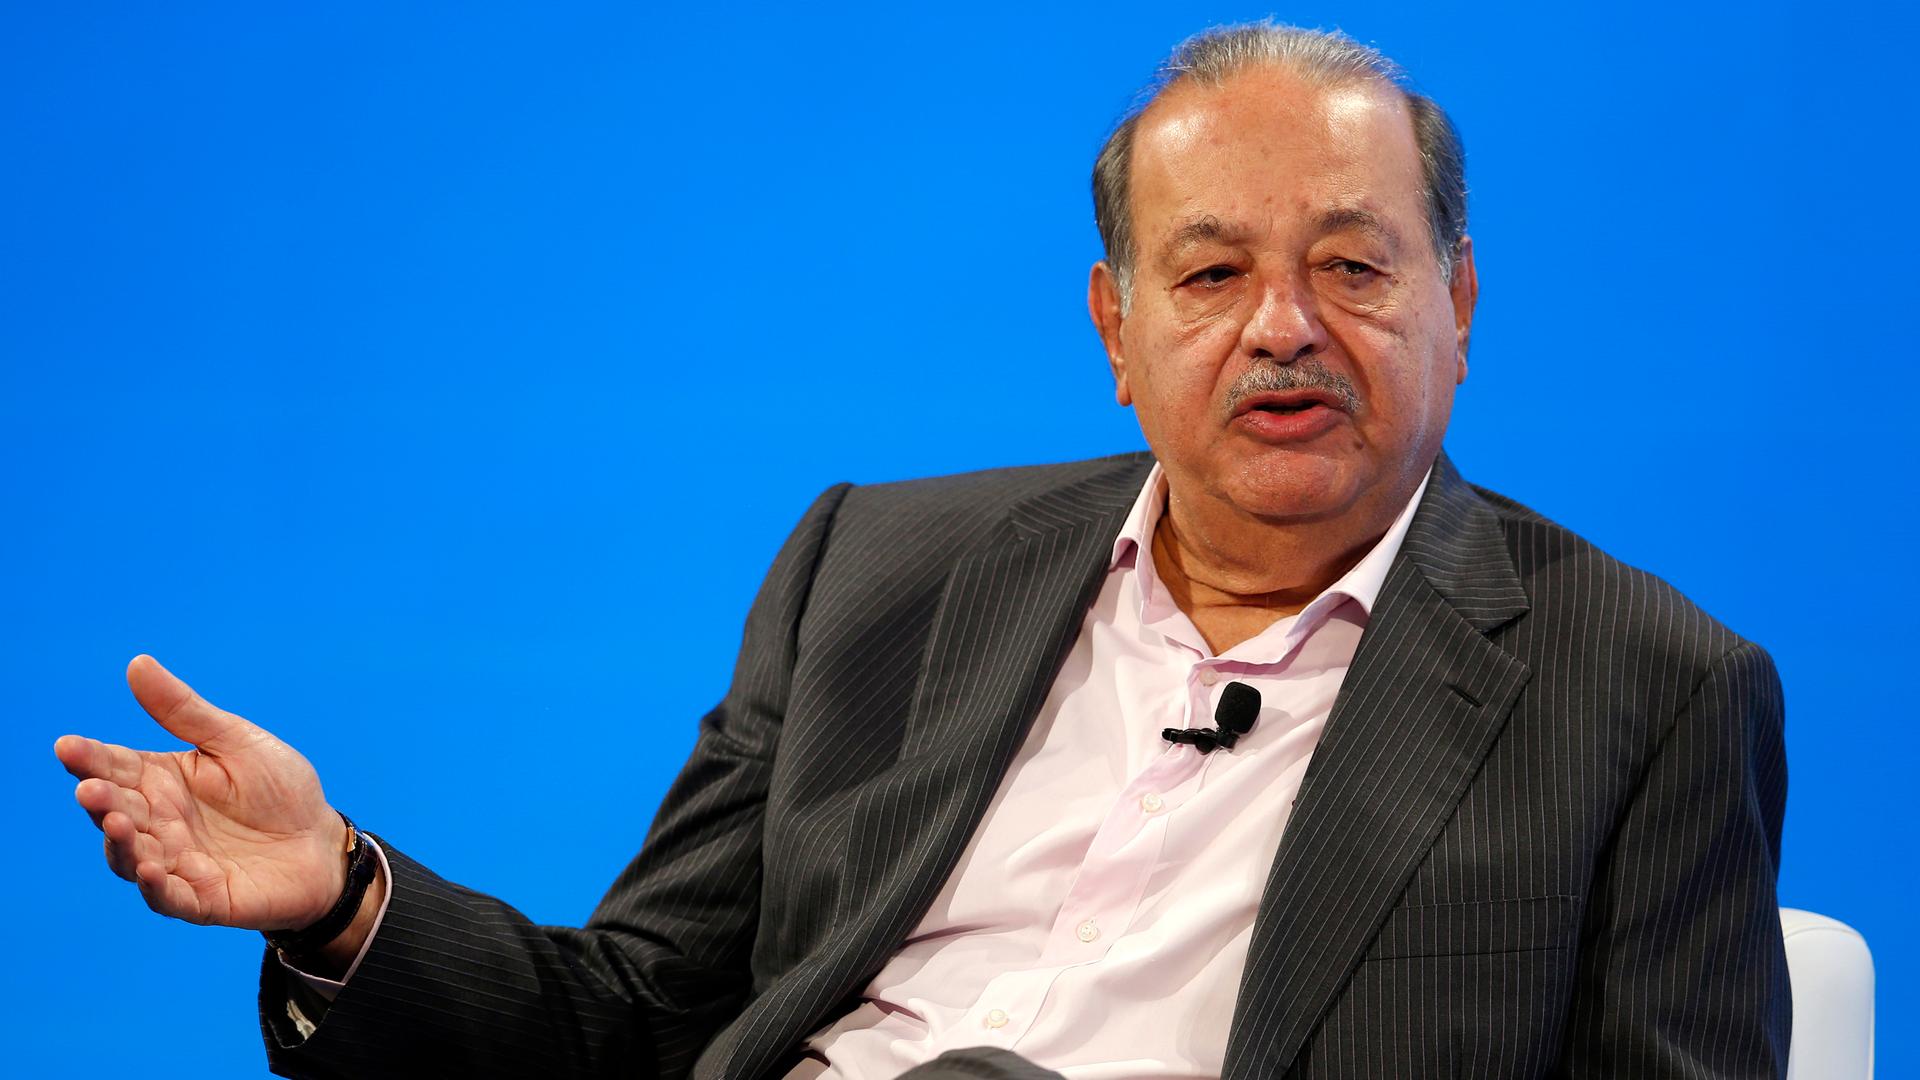 Carlos Slim, Mexico's richest man, fires Trump